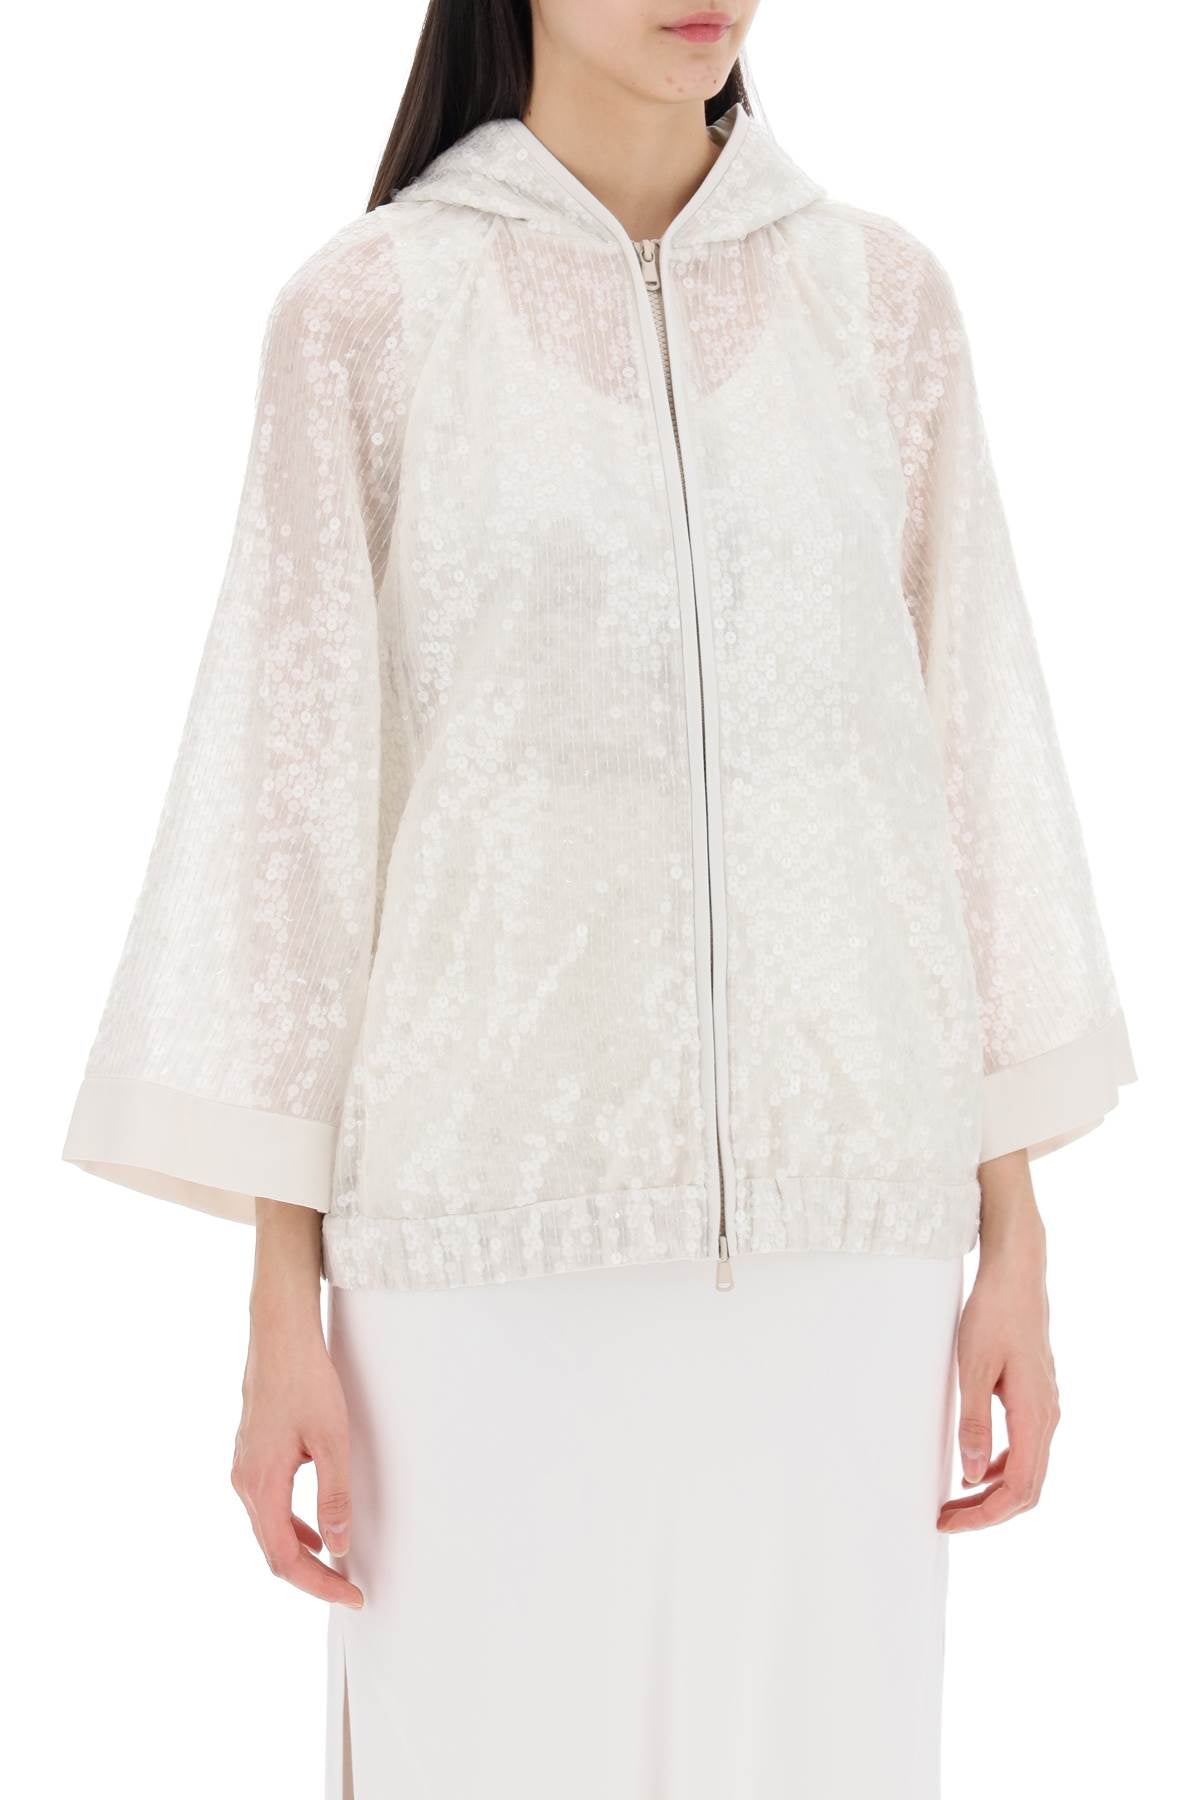 Shop Brunello Cucinelli White Silk Crispy Jacket With Sequins For Women